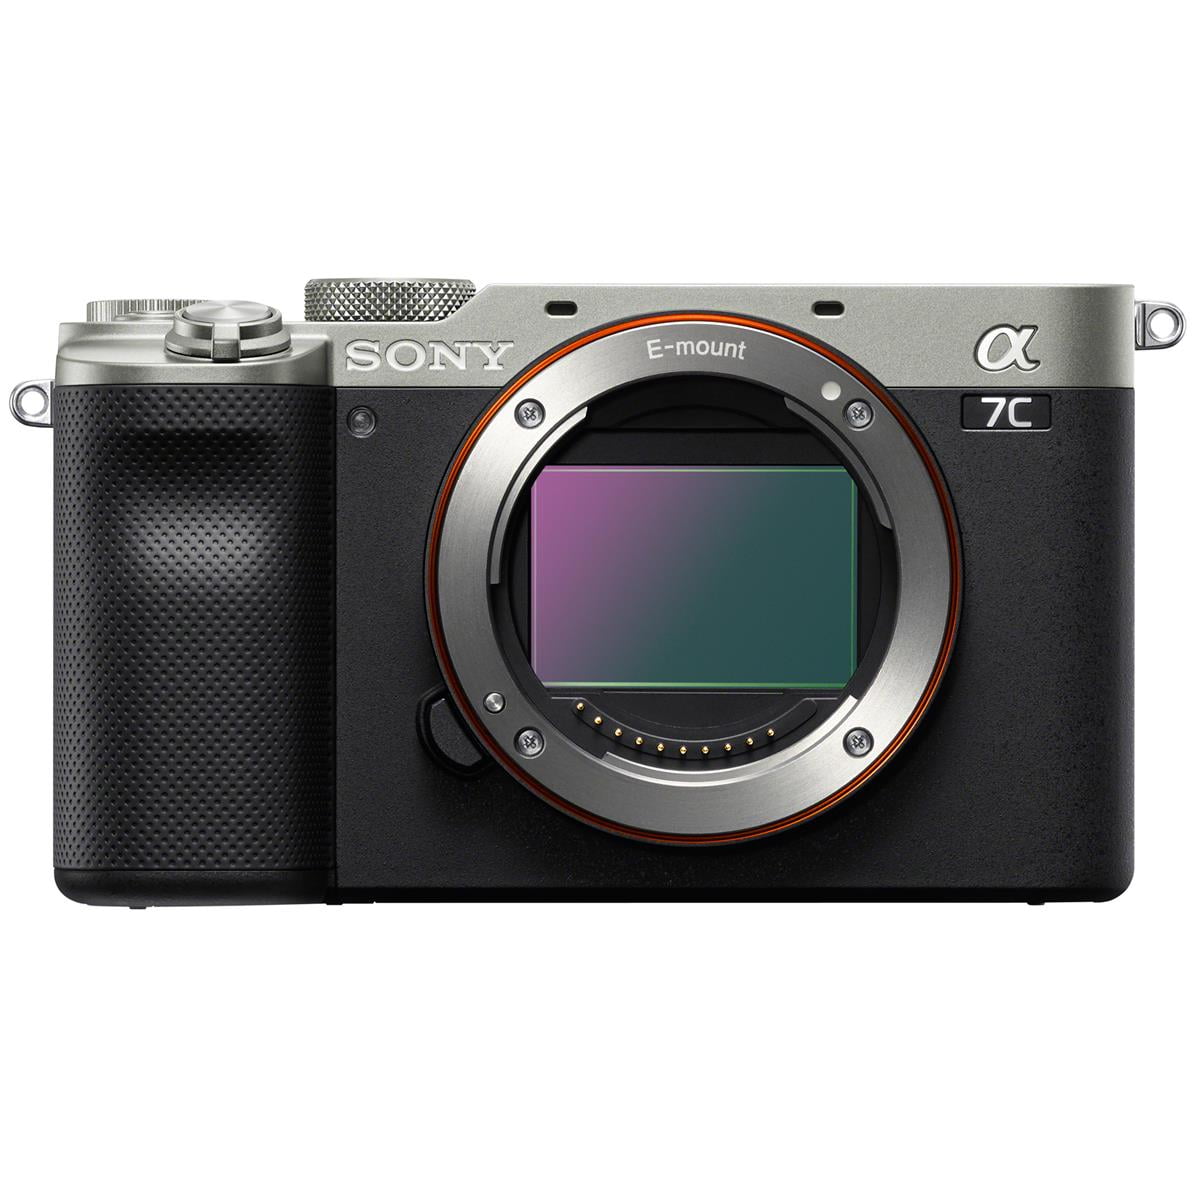 Sony Alpha 7C Full-frame Mirrorless Camera (Silver) - Body Only